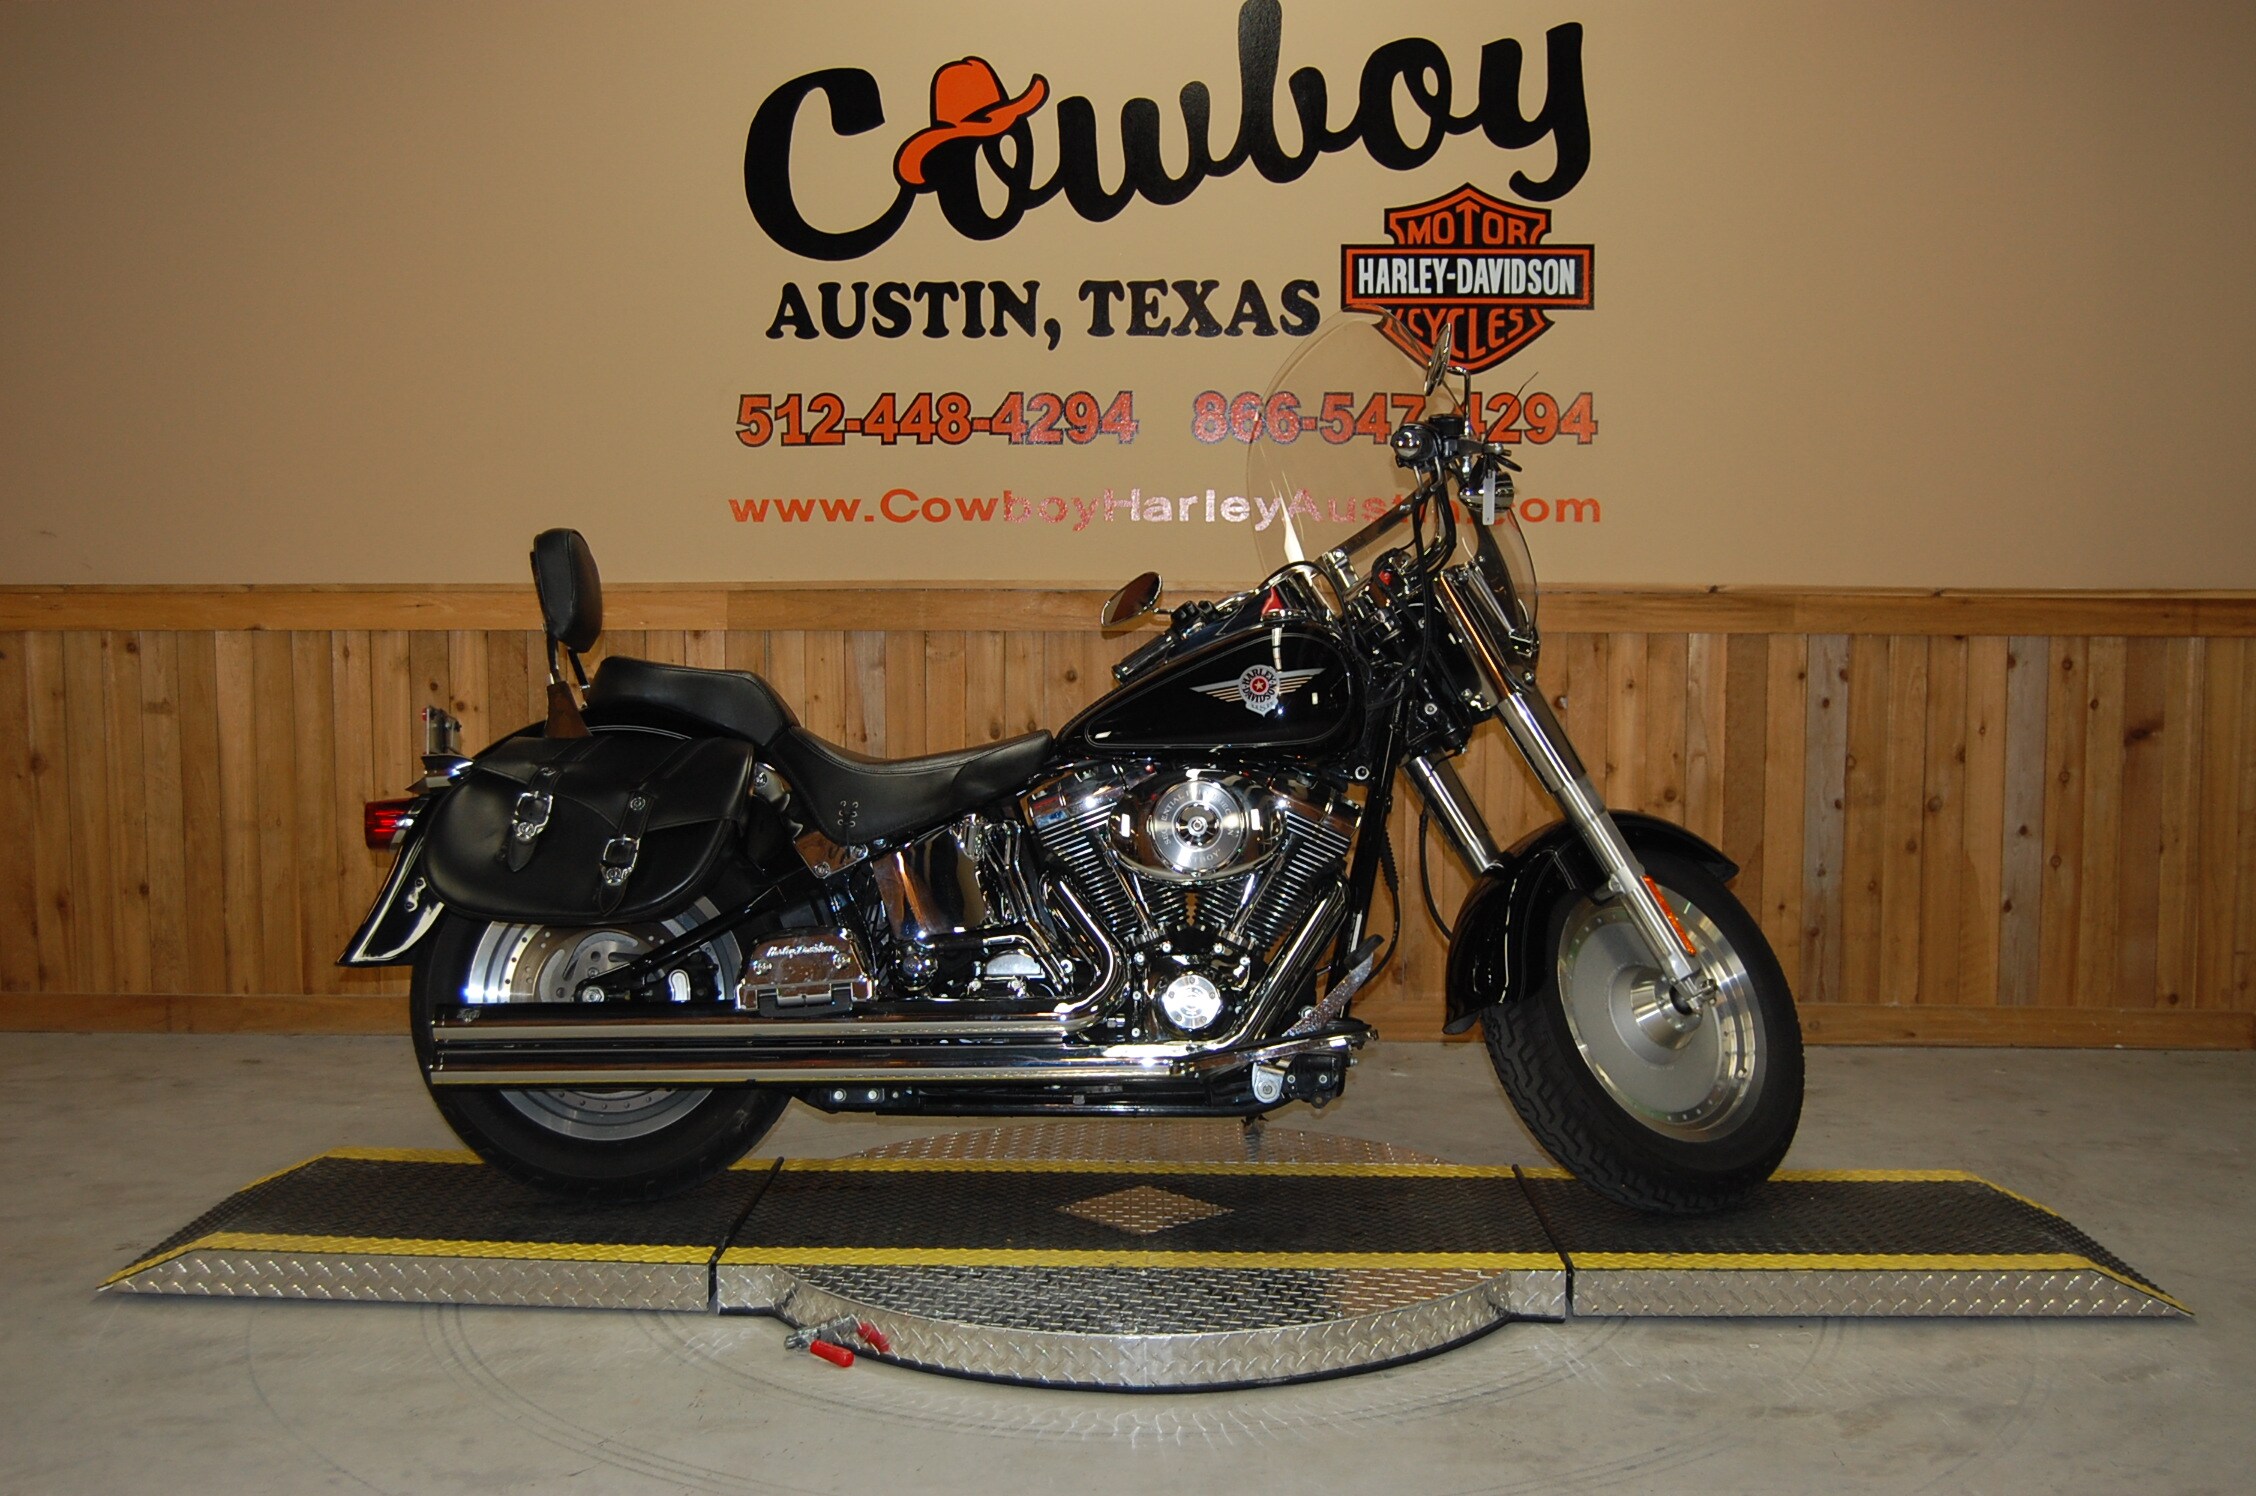 Cowboy Harley Davidson Of Austin Tx New Used Motorcycle